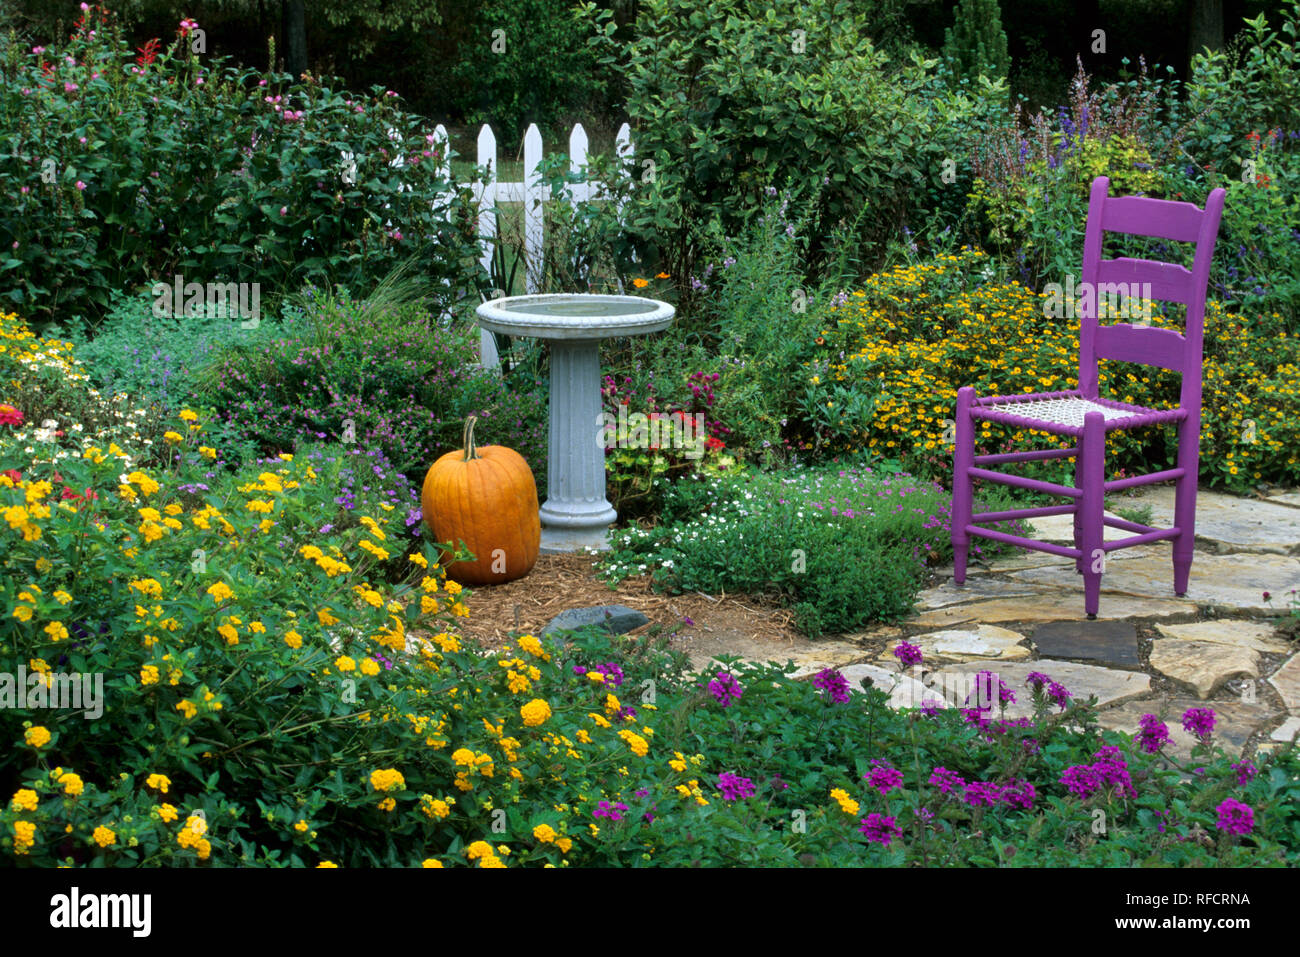 63821-12517 Fall Garden Display - Purple chair, pumpkin, bird bath & fence in flower bed  Marion Co.  IL Stock Photo